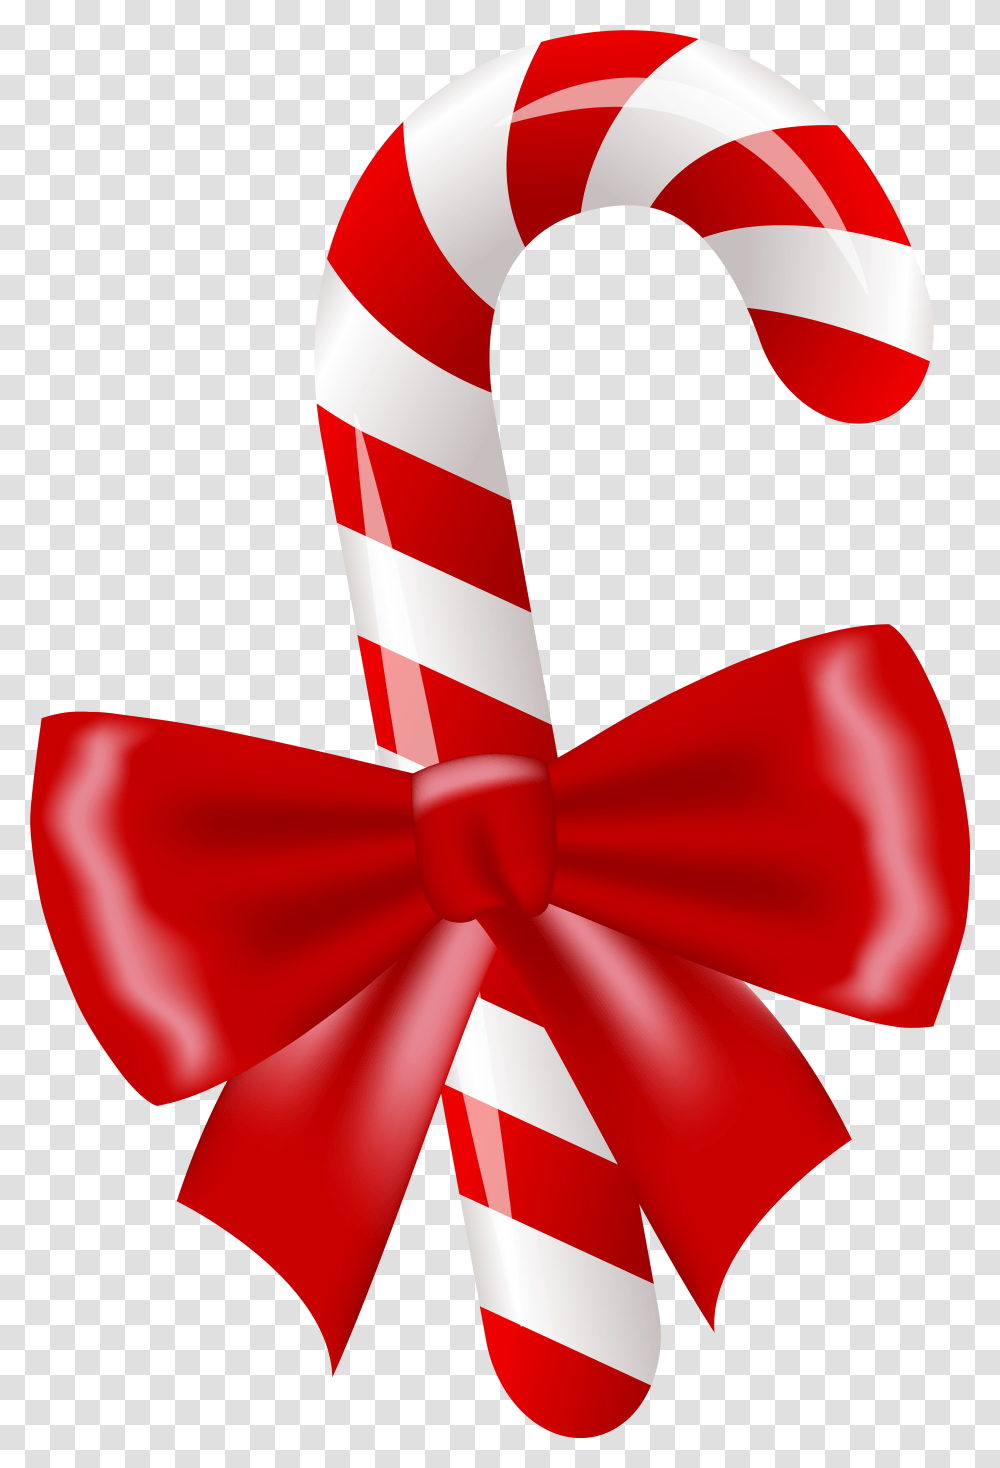 Candy Cane Lollipop Clip Art Christmas Candy Cane Clipart, Tie, Accessories, Accessory Transparent Png